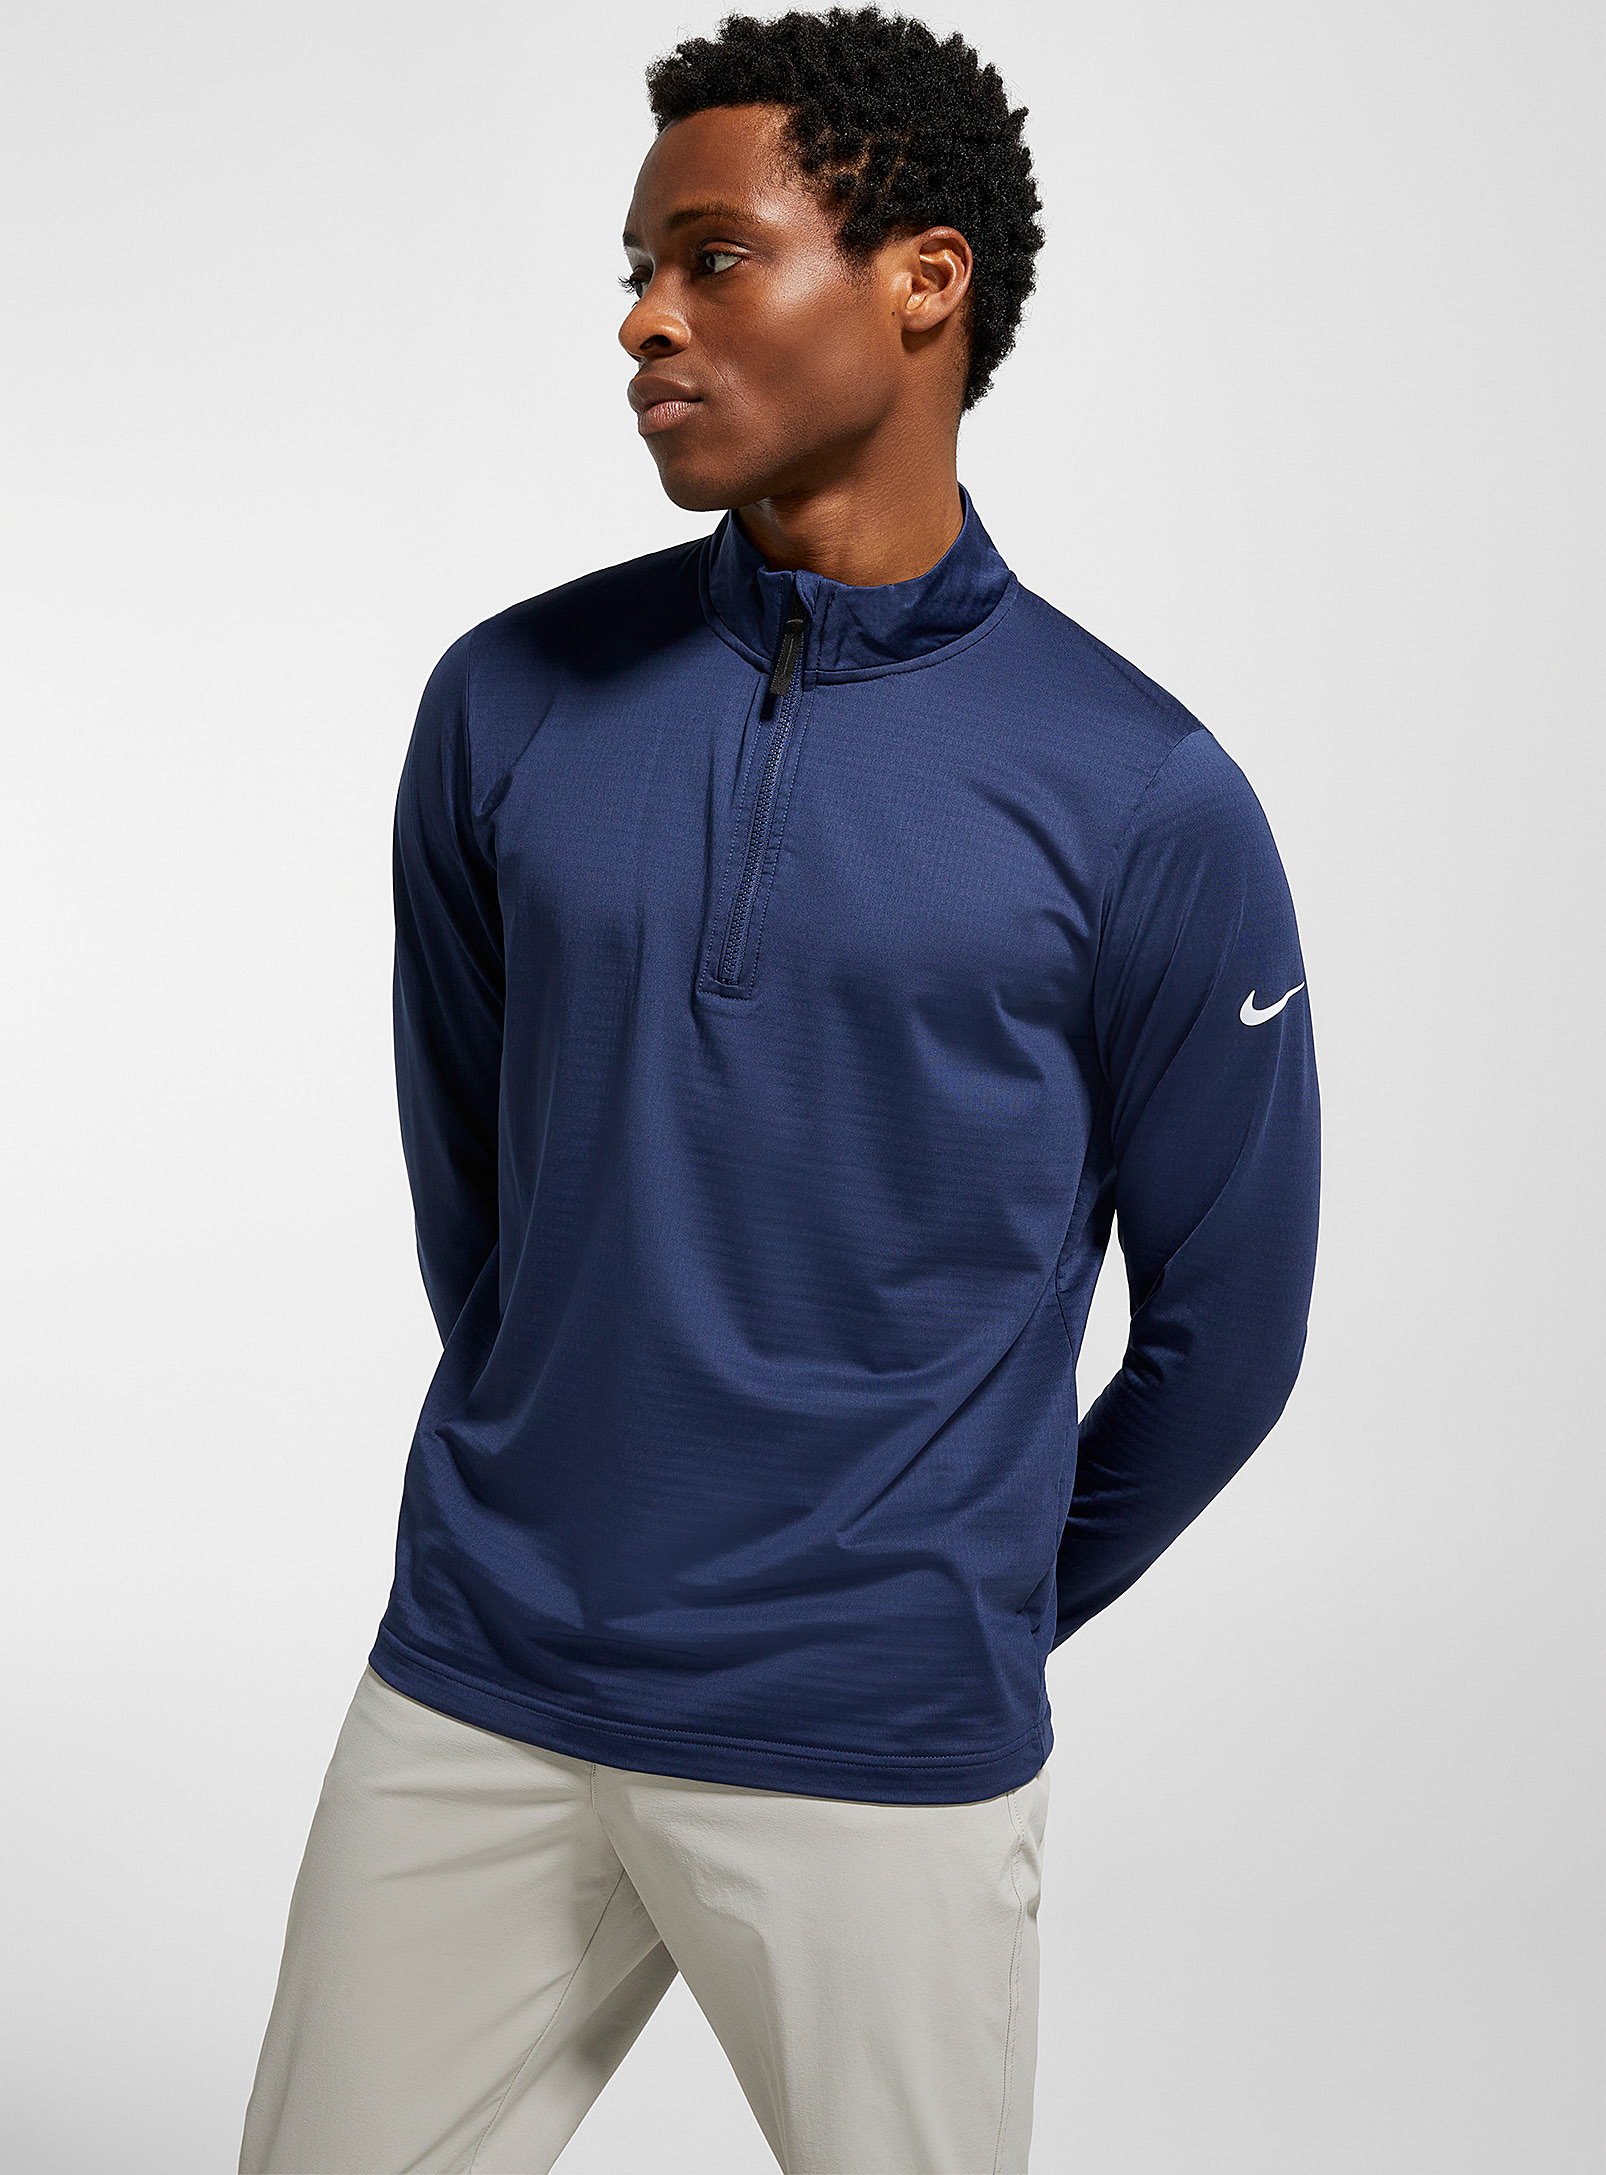 Nike Golf - Men's Dri-Fit Victory zip-neck top